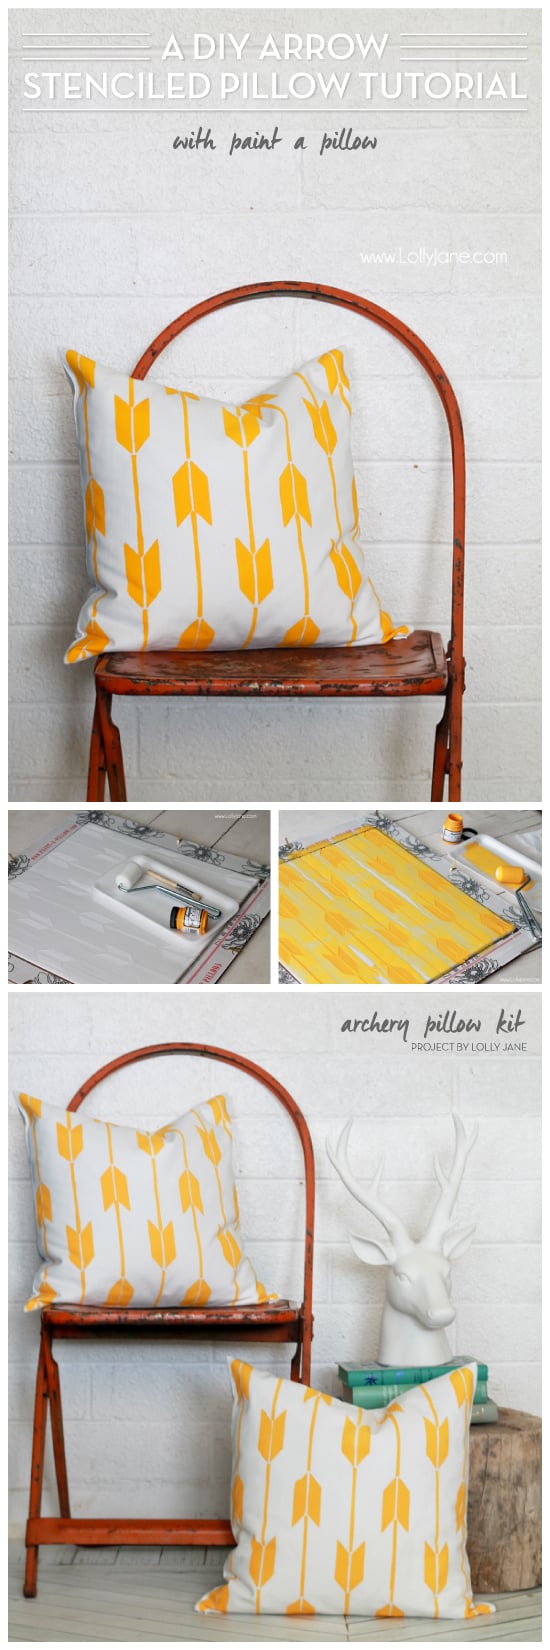 DIY arrow themed accent pillows using the Archery Paint-A-Pillow kit. http://paintapillow.com/index.php/archery-paint-a-pillow-kit.html